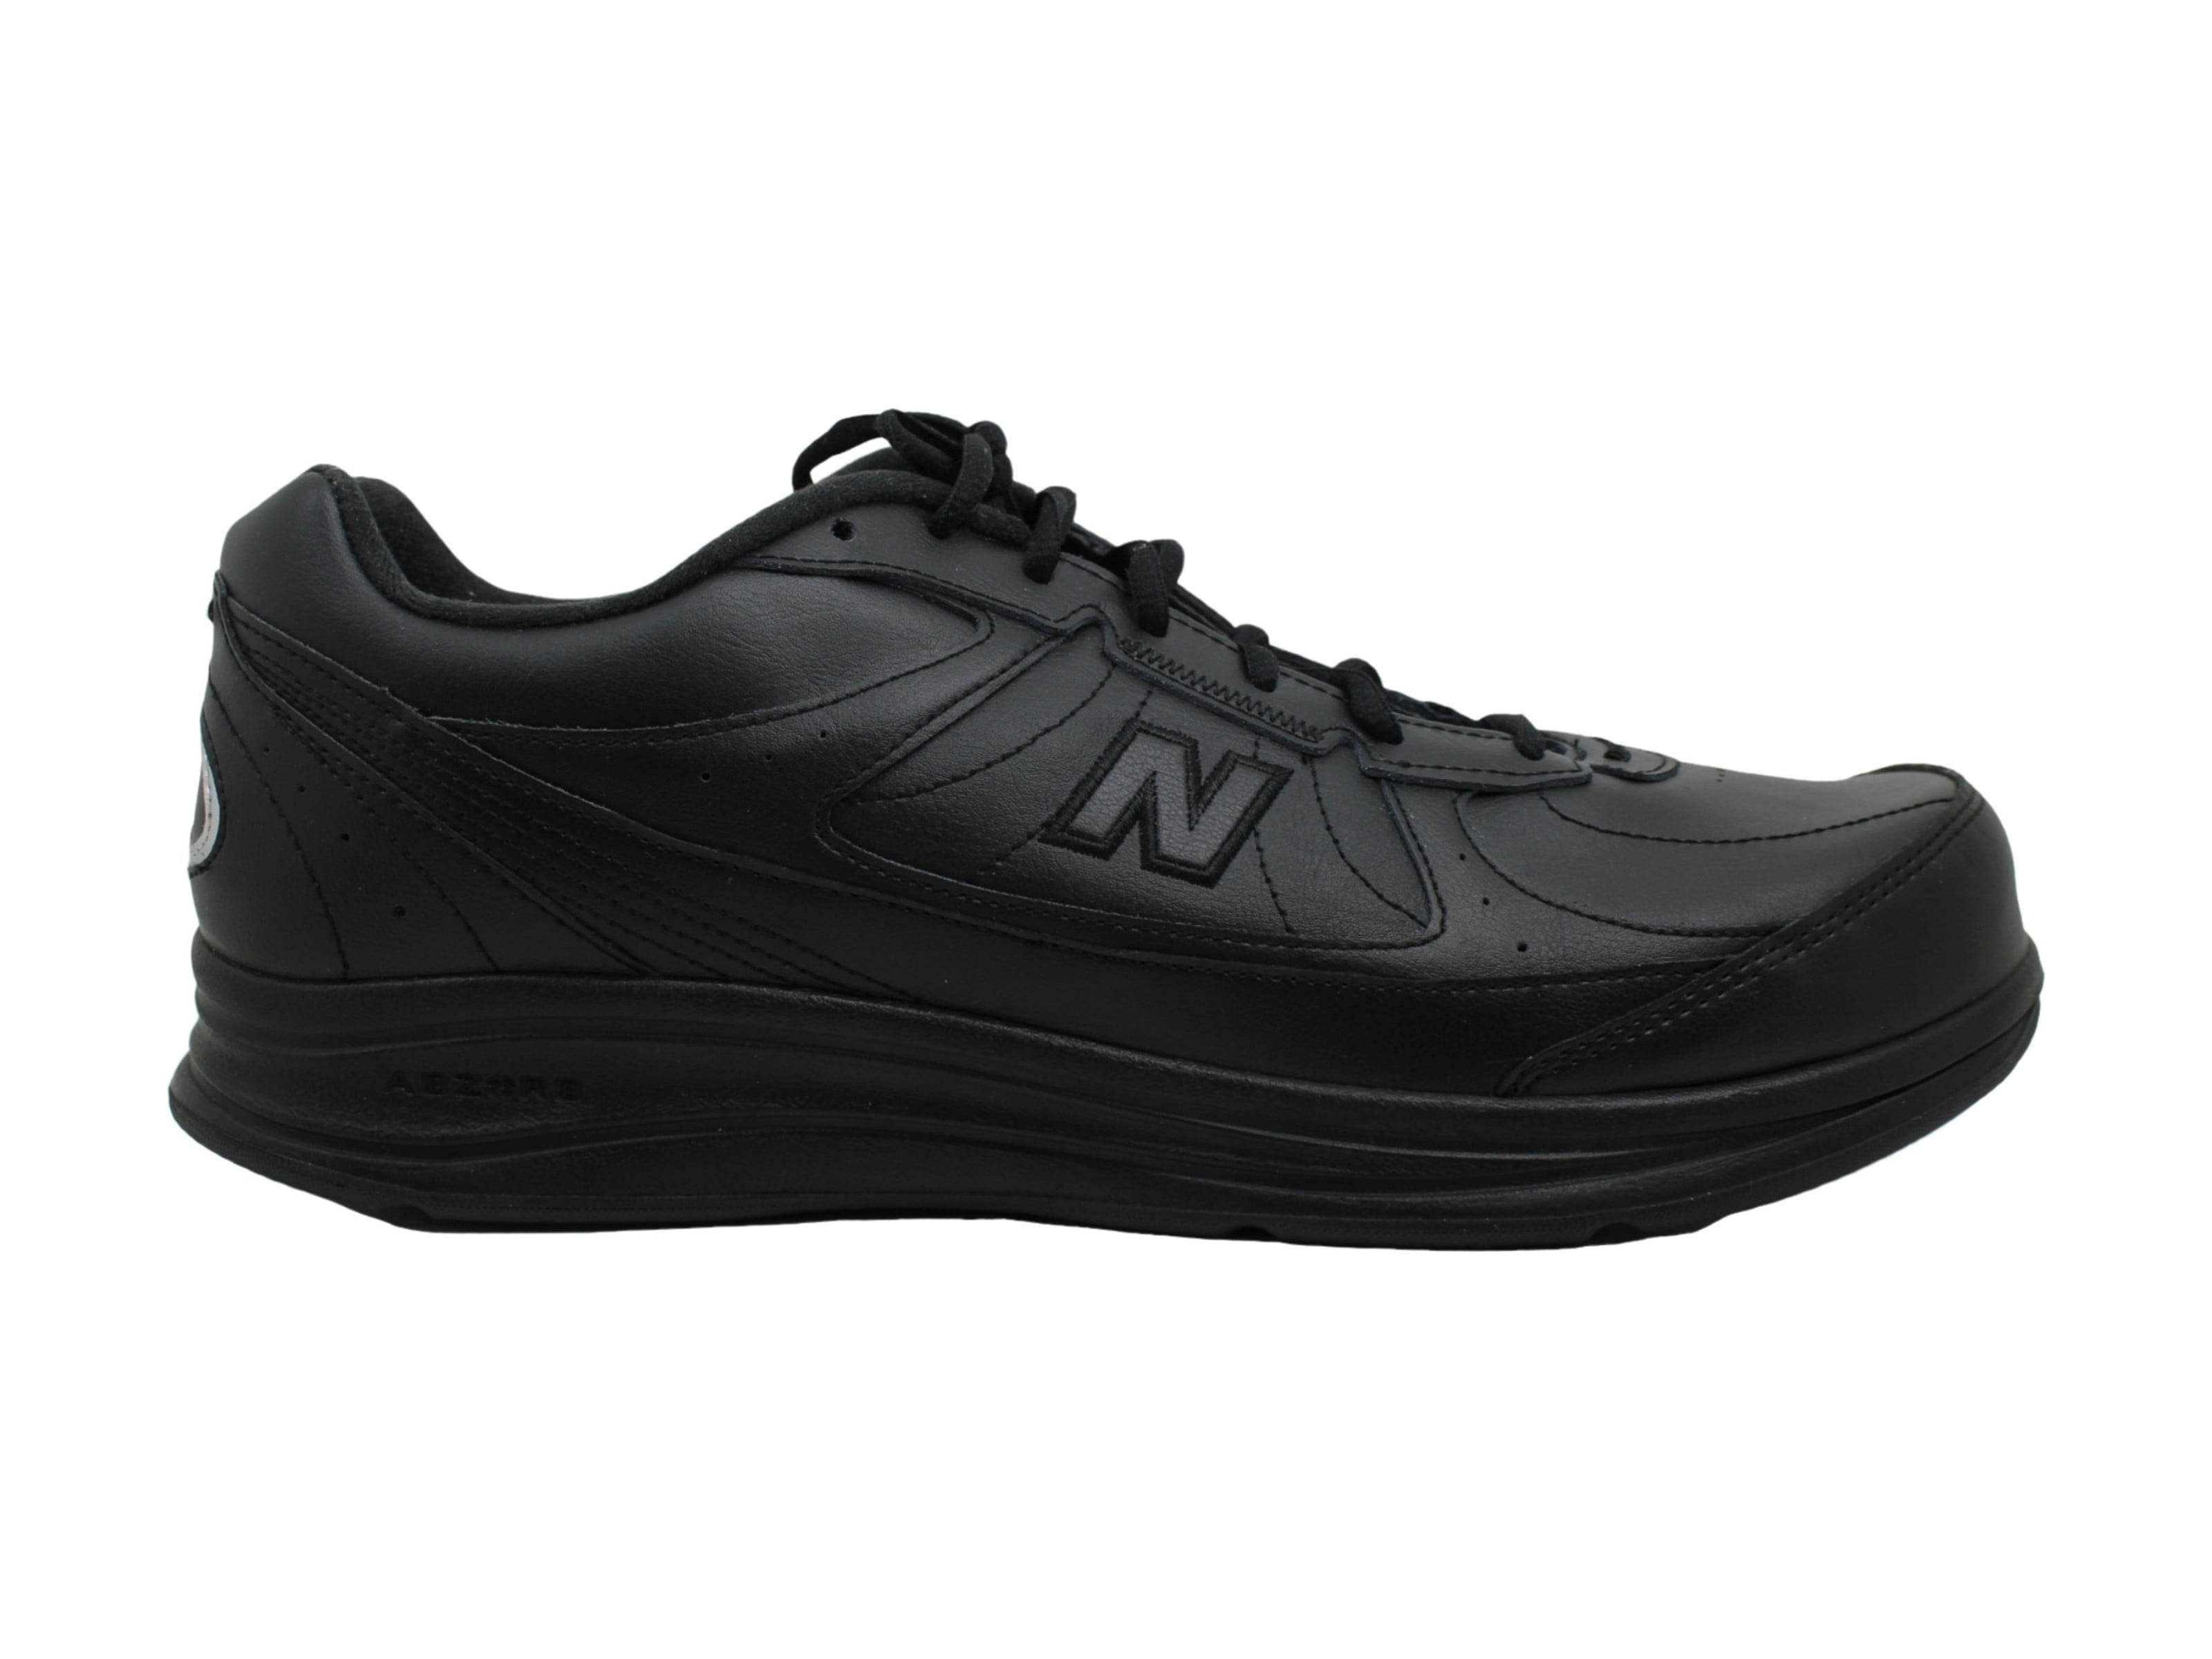 new balance men's mw577 walking shoe reviews